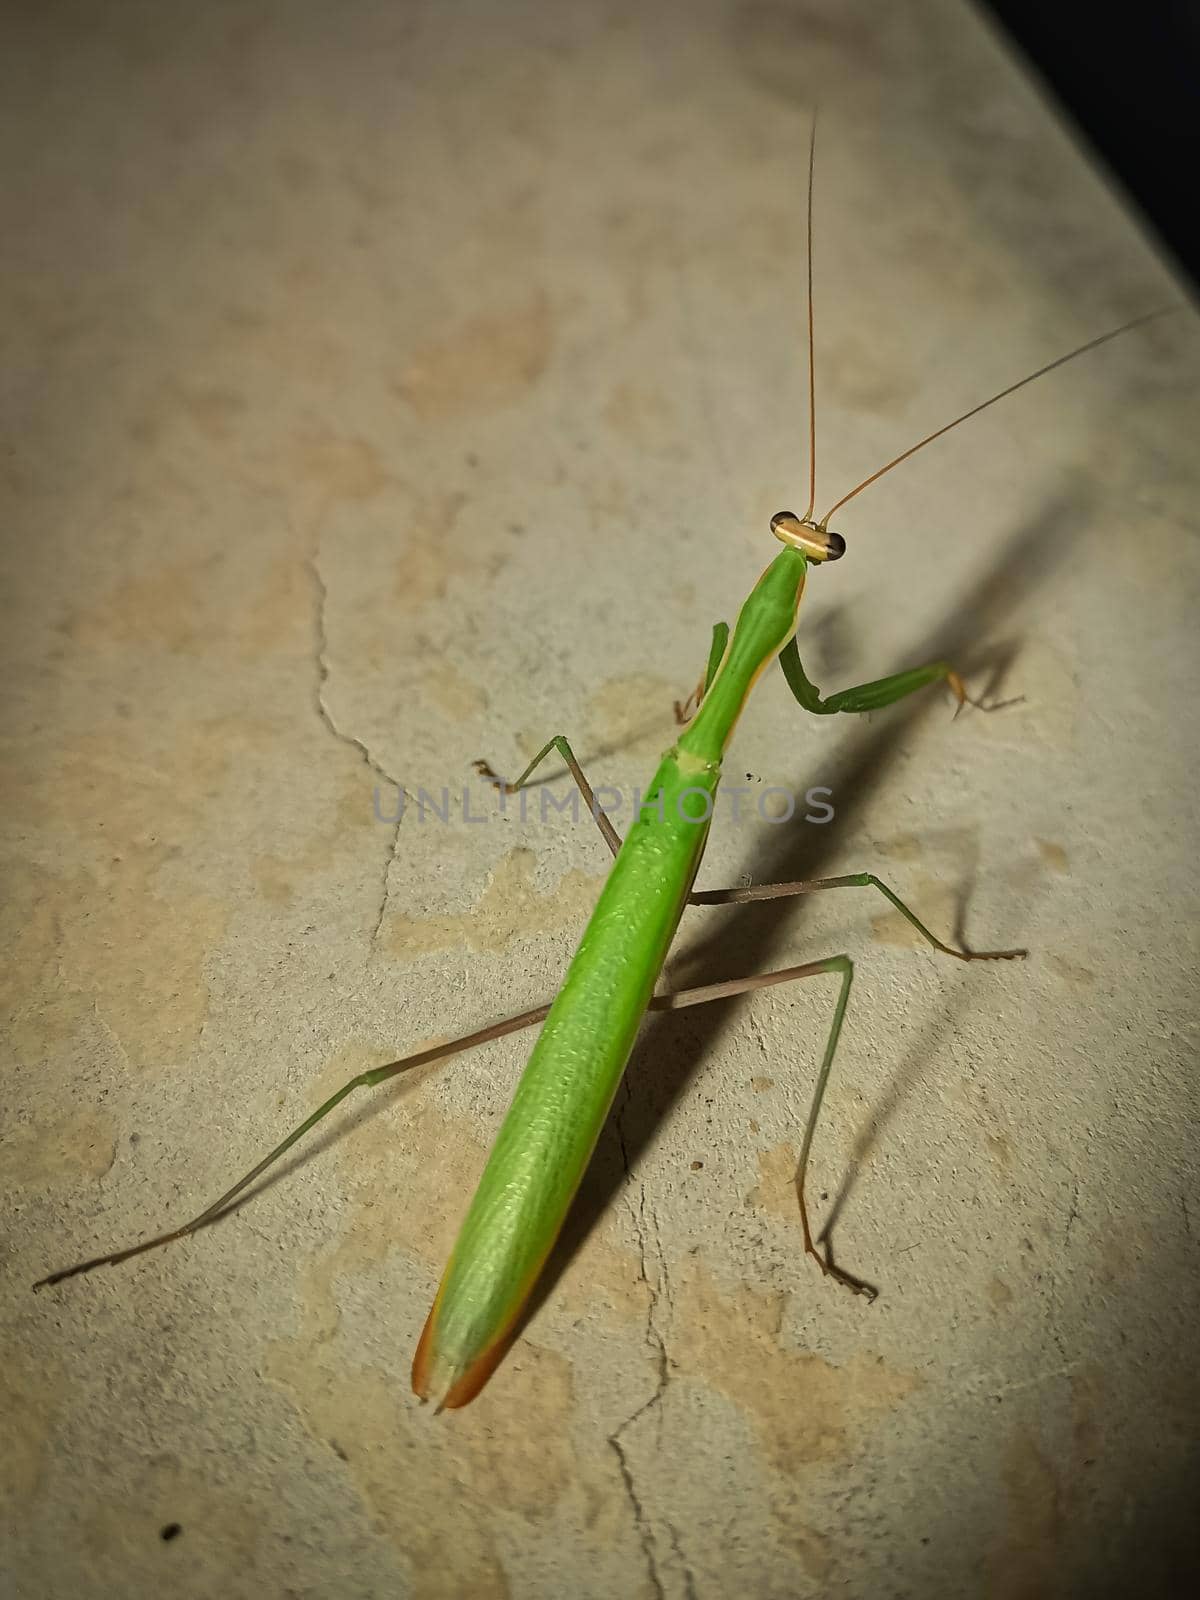 Closeup shot of a green common praying mantis by wektorygrafika